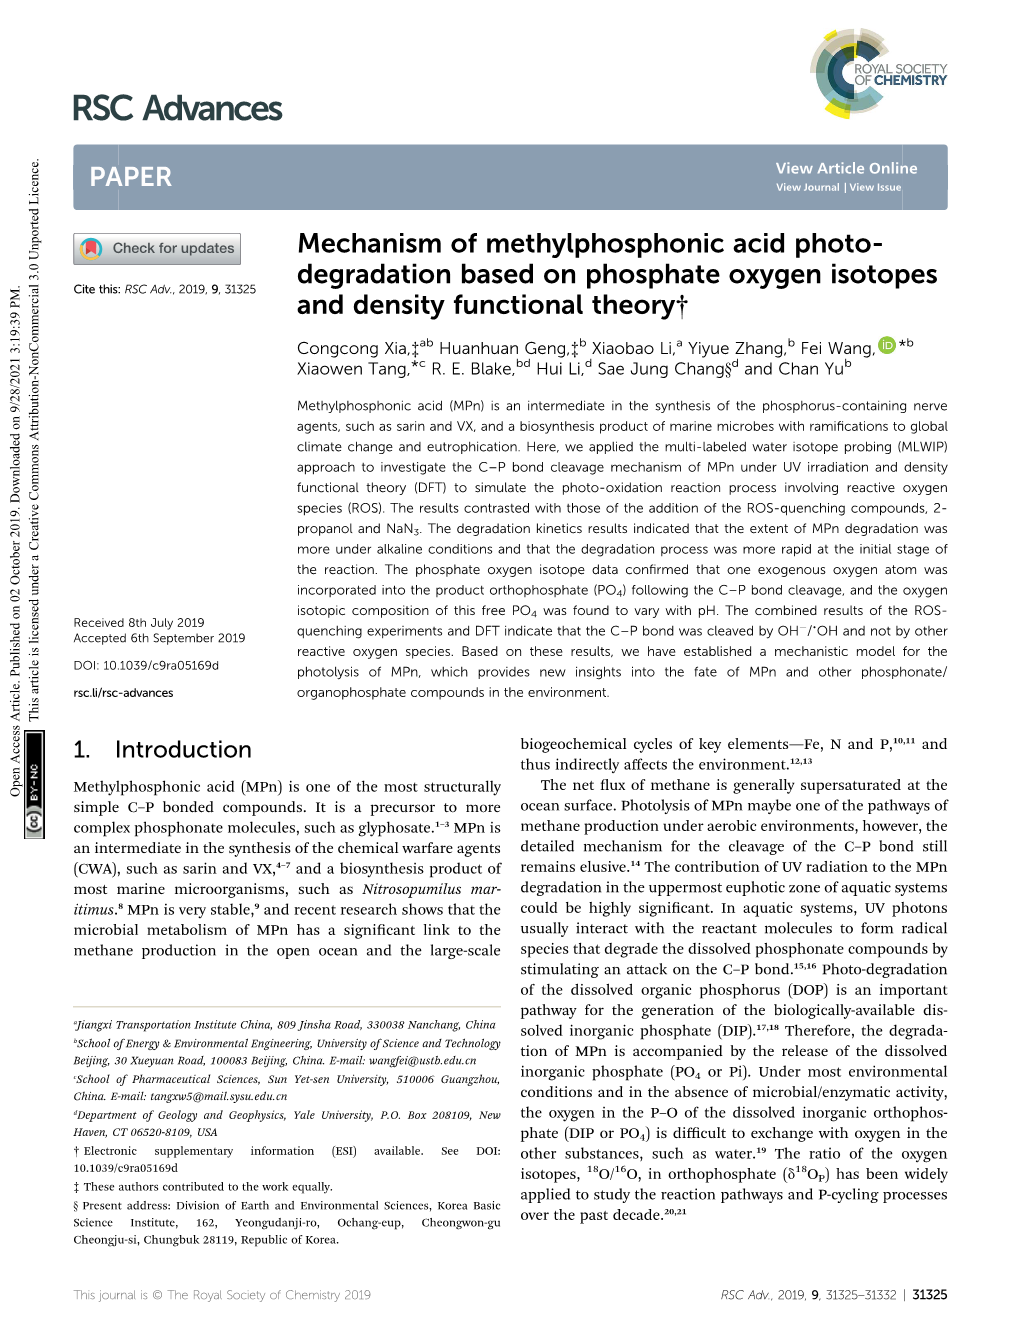 Mechanism of Methylphosphonic Acid Photo-Degradation Based On